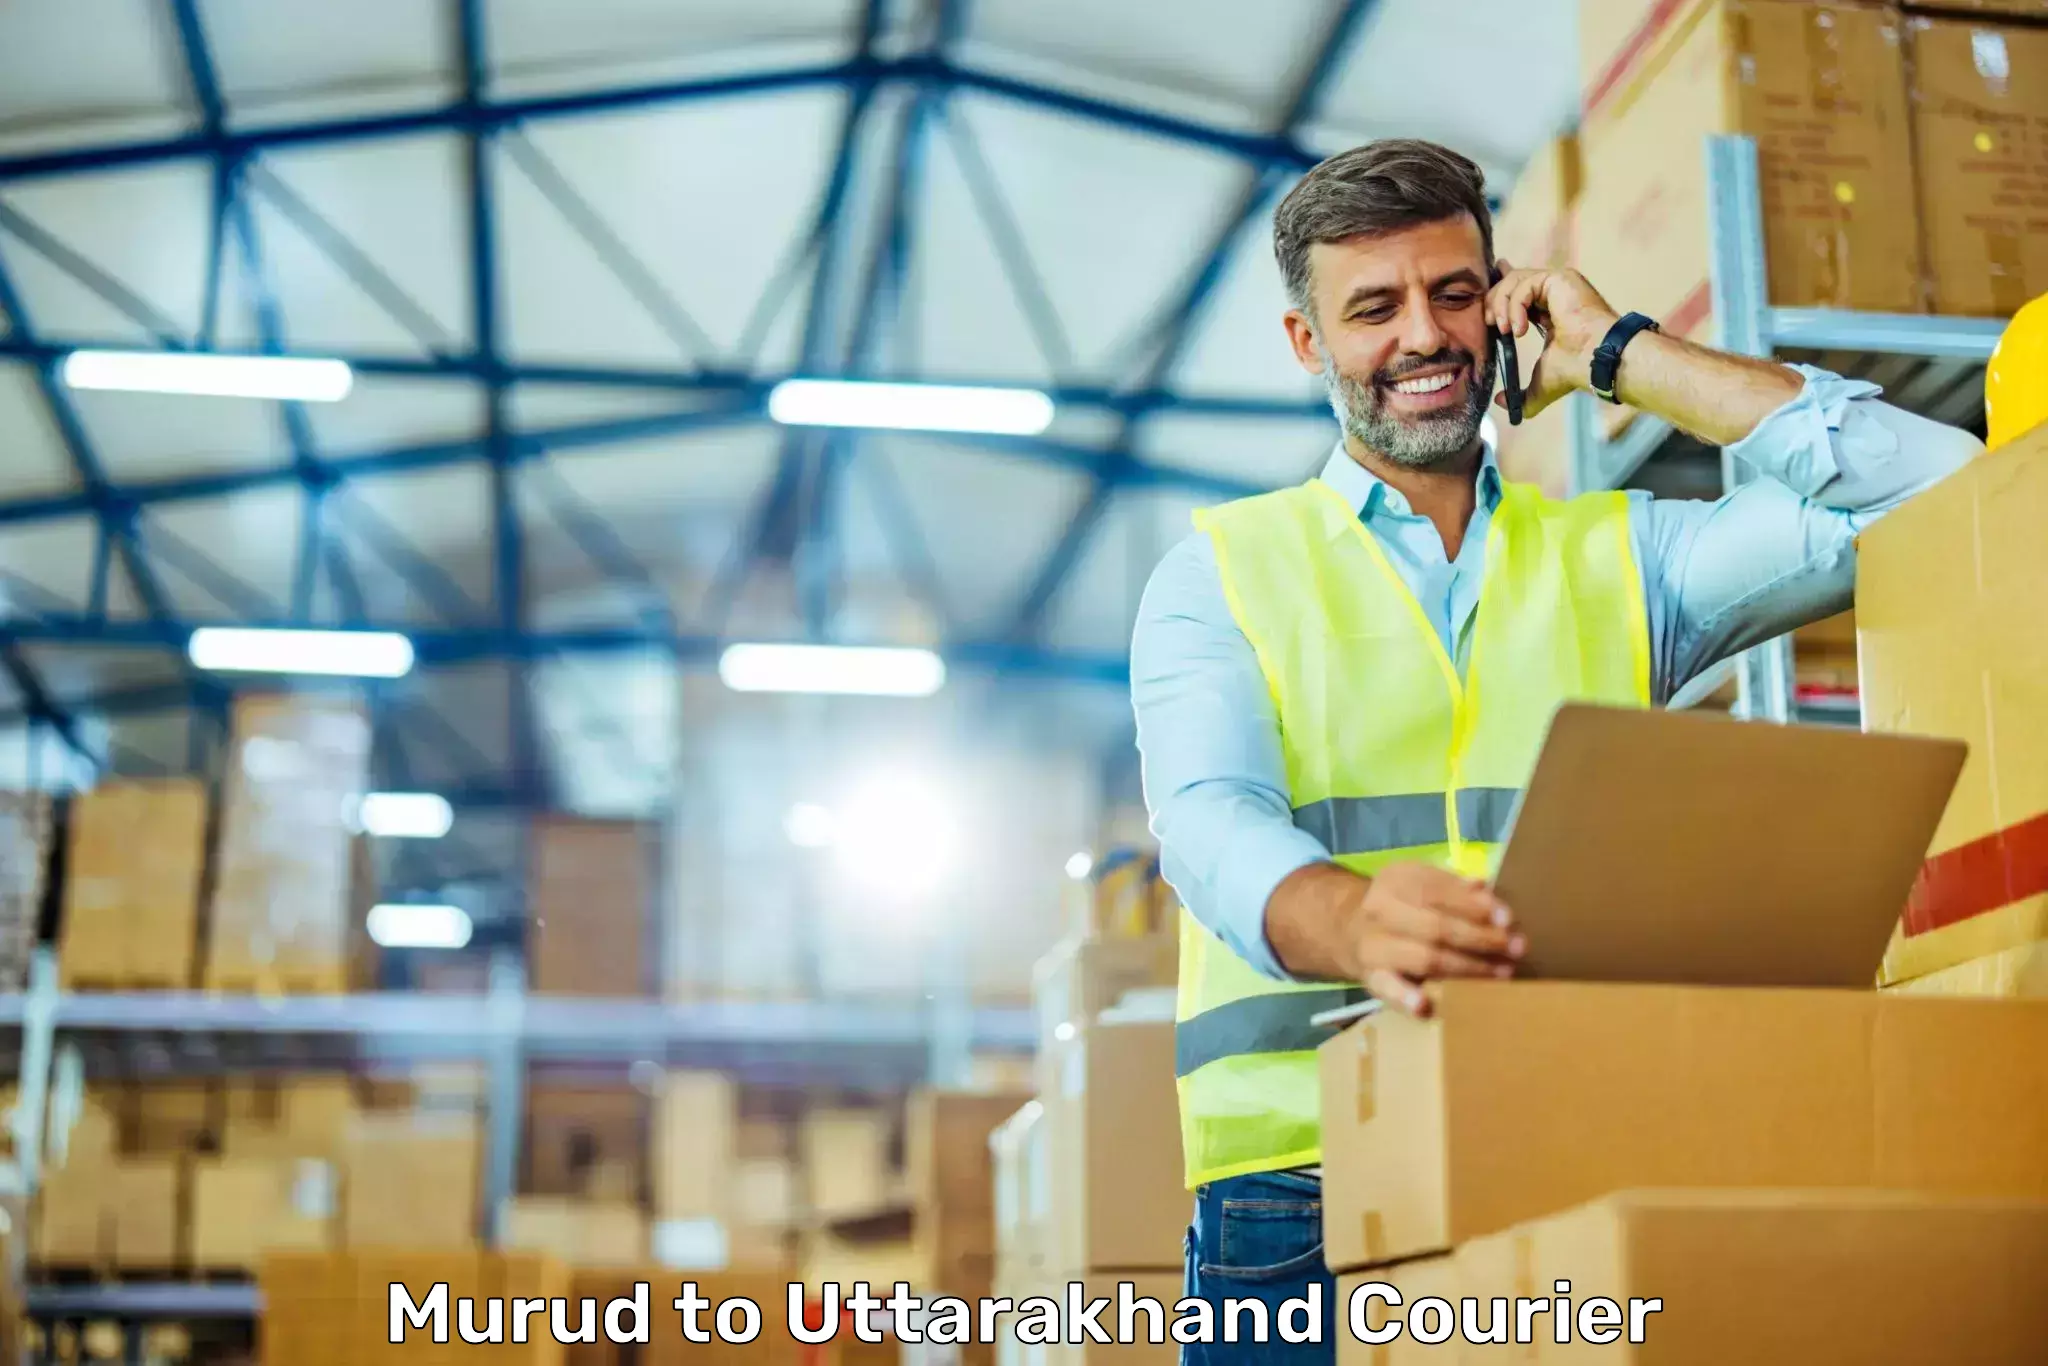 Cash on delivery service Murud to Dehradun